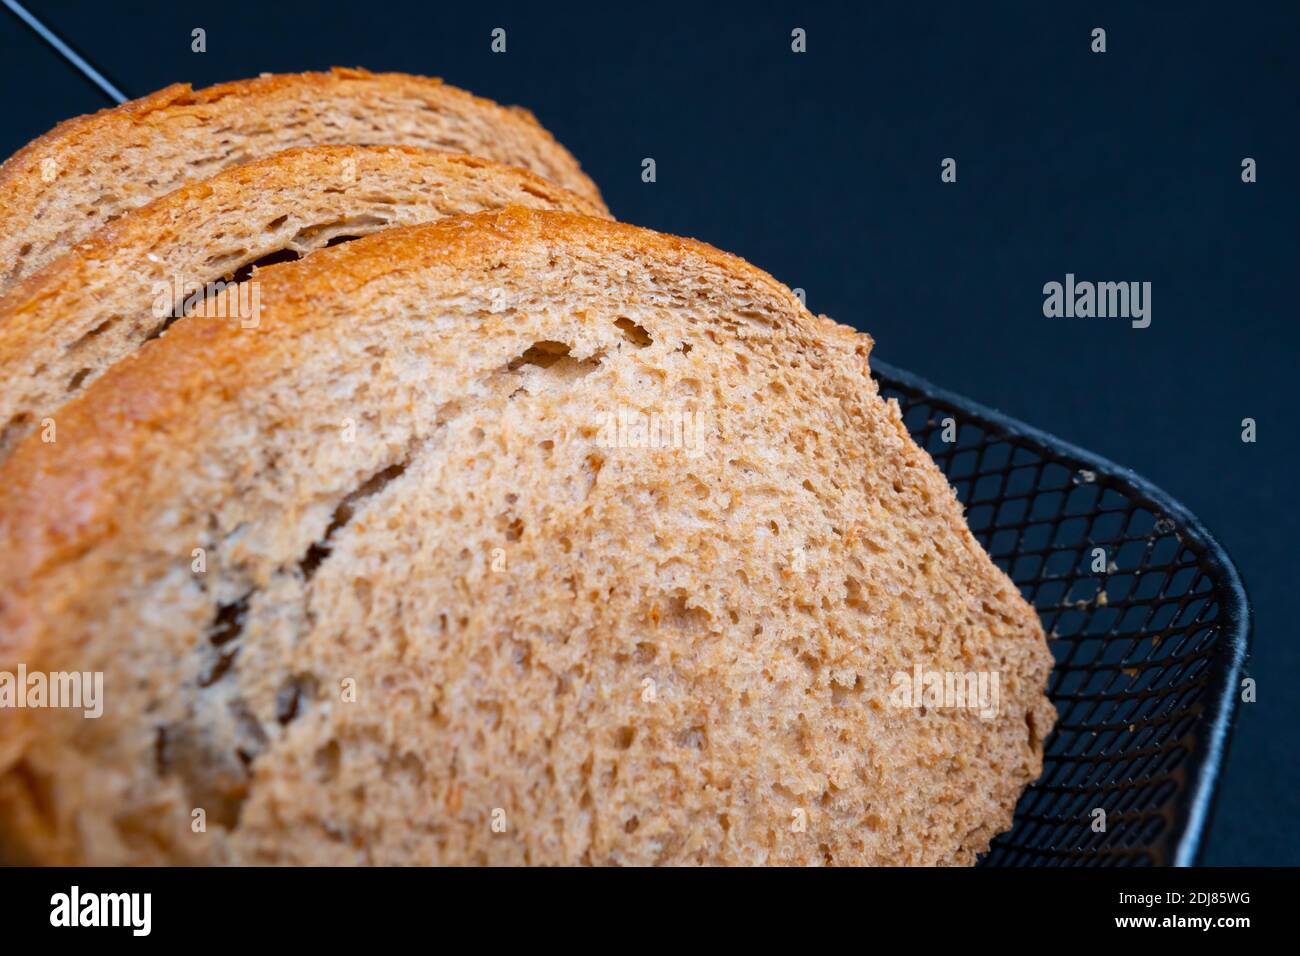 Whole grain bread on black background Stock Photo